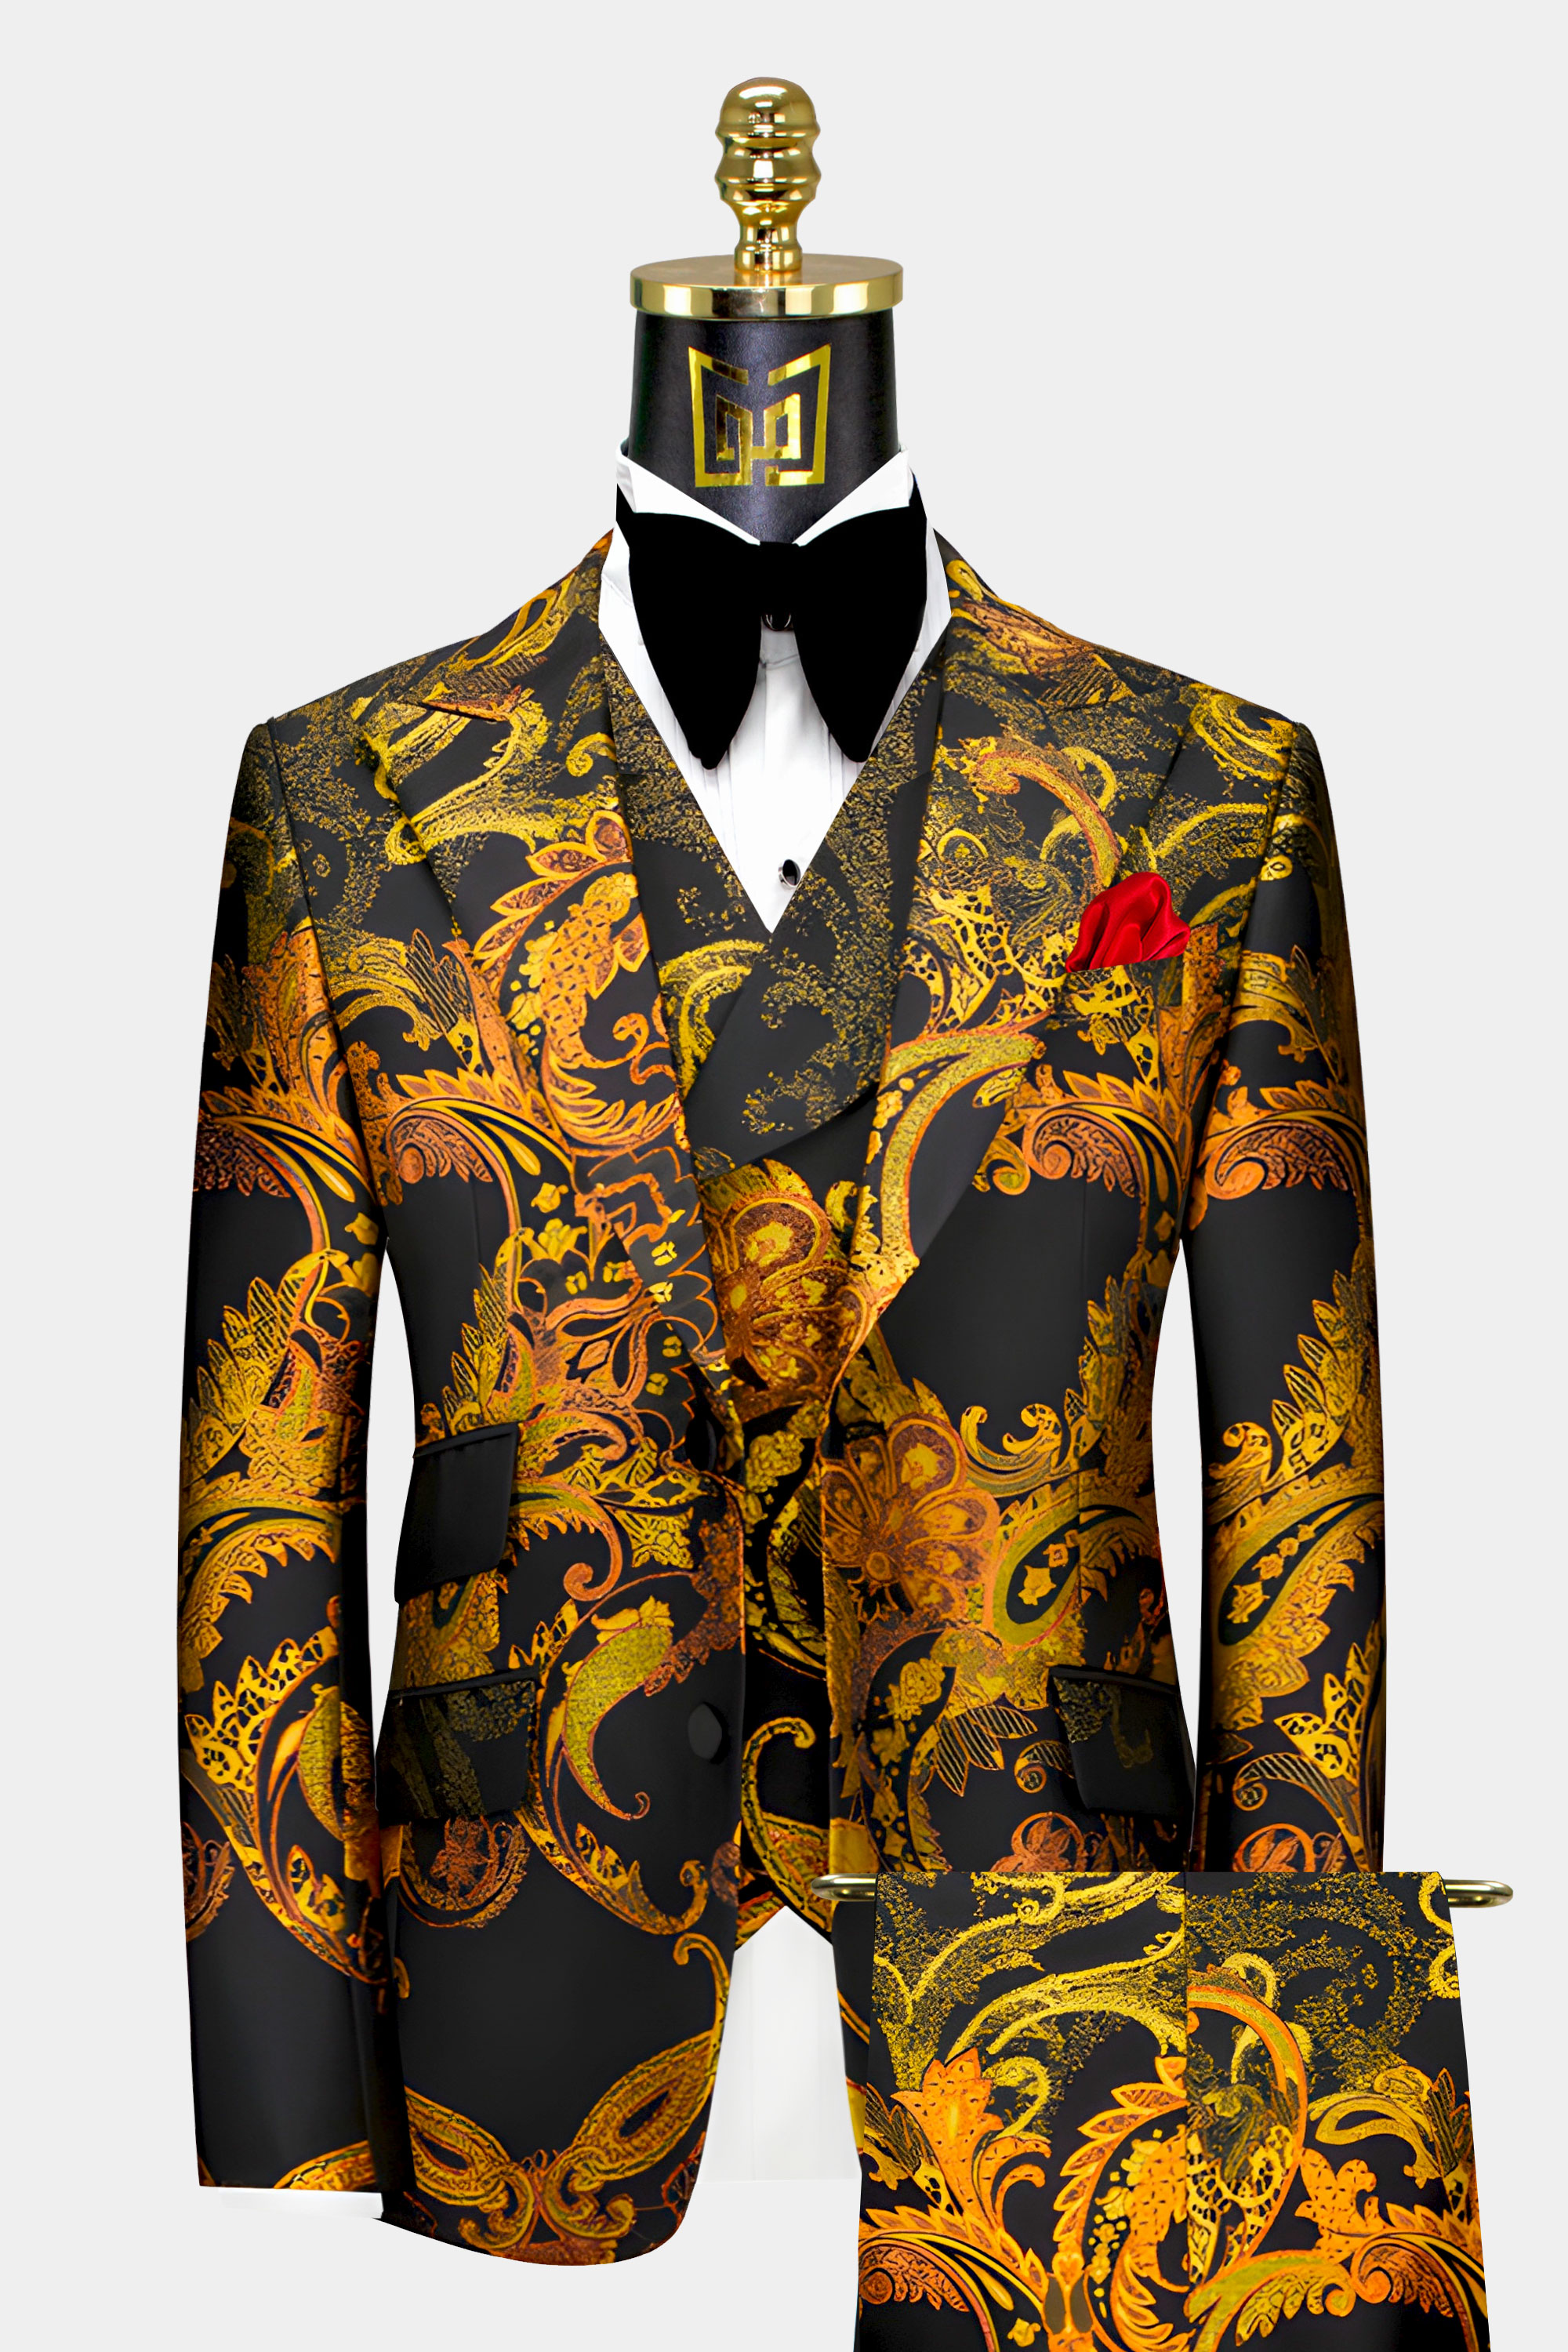 Mens-Black-and-Orange-Suit-Prom-Groom-Wedding-Tuxedo-from-Gentlemansguru.com